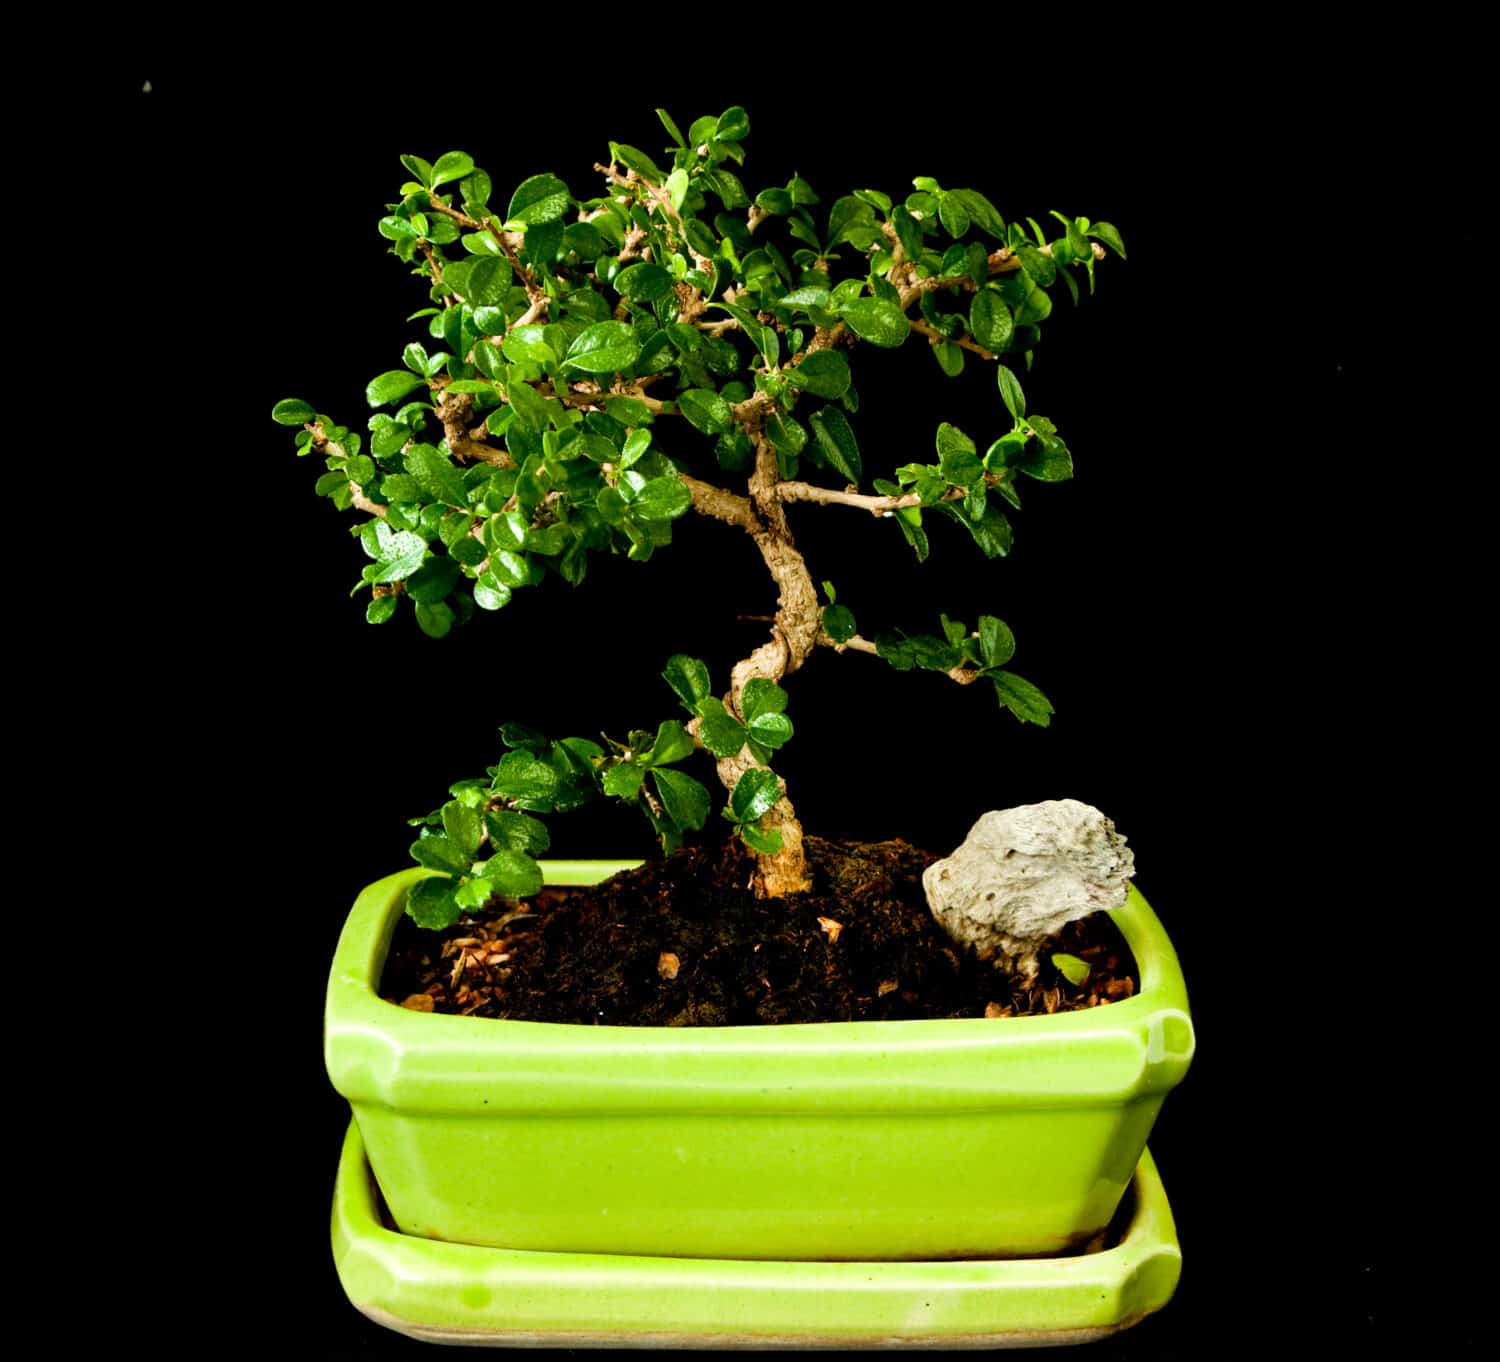 fukien tea plant as japanese bonsai style on black background